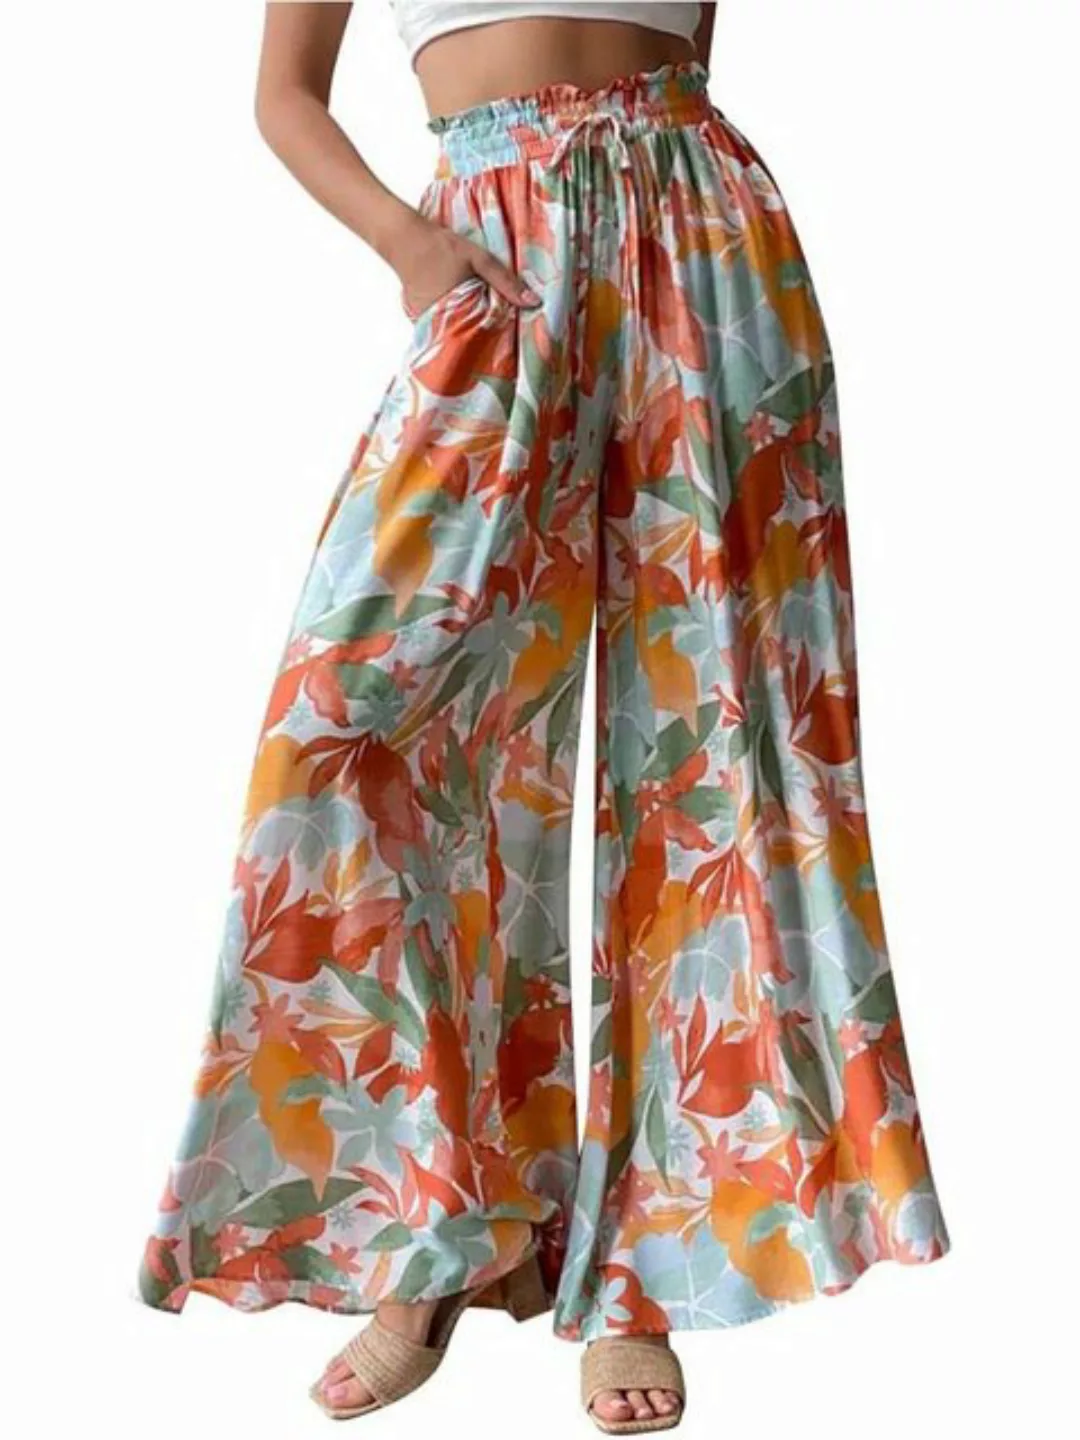 KIKI Culotte Damen Elegant Boho Blume High Waist Hose Strandhose Sommerhose günstig online kaufen